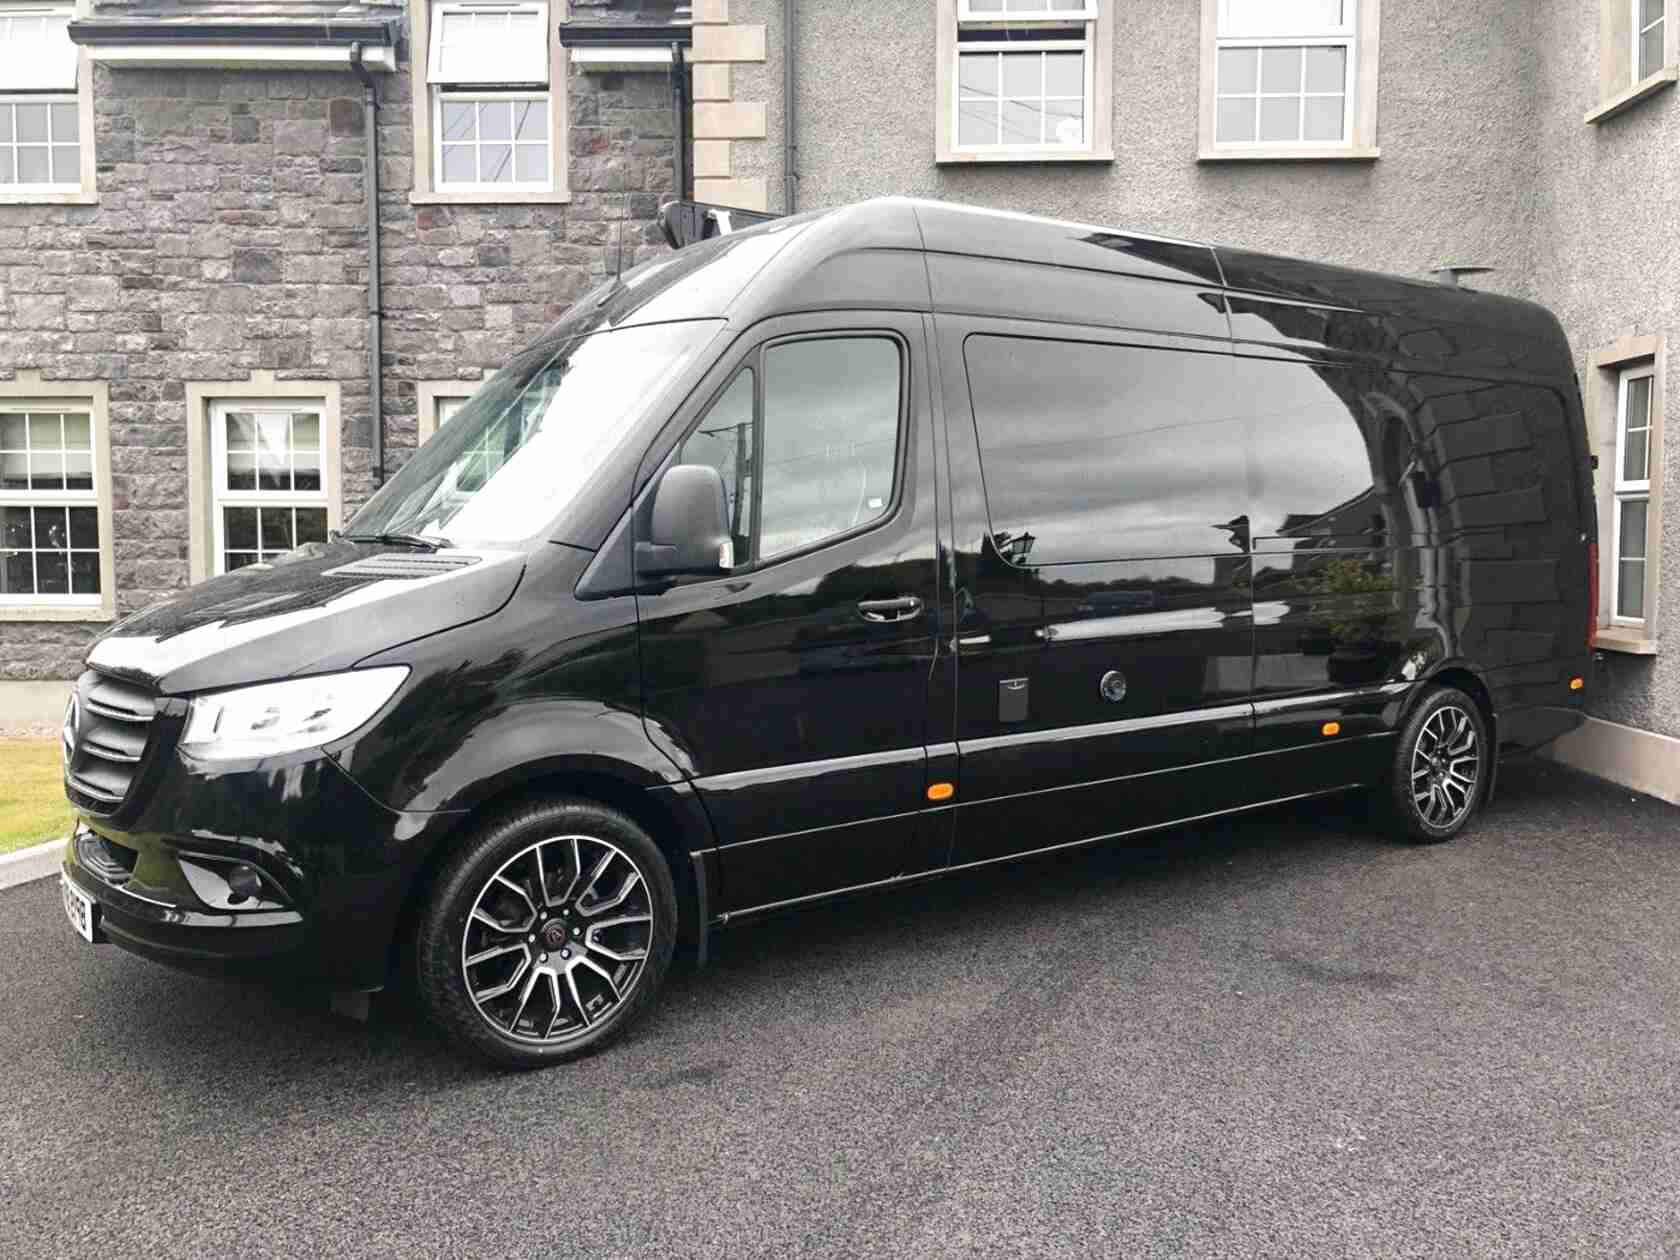 converted van for sale uk